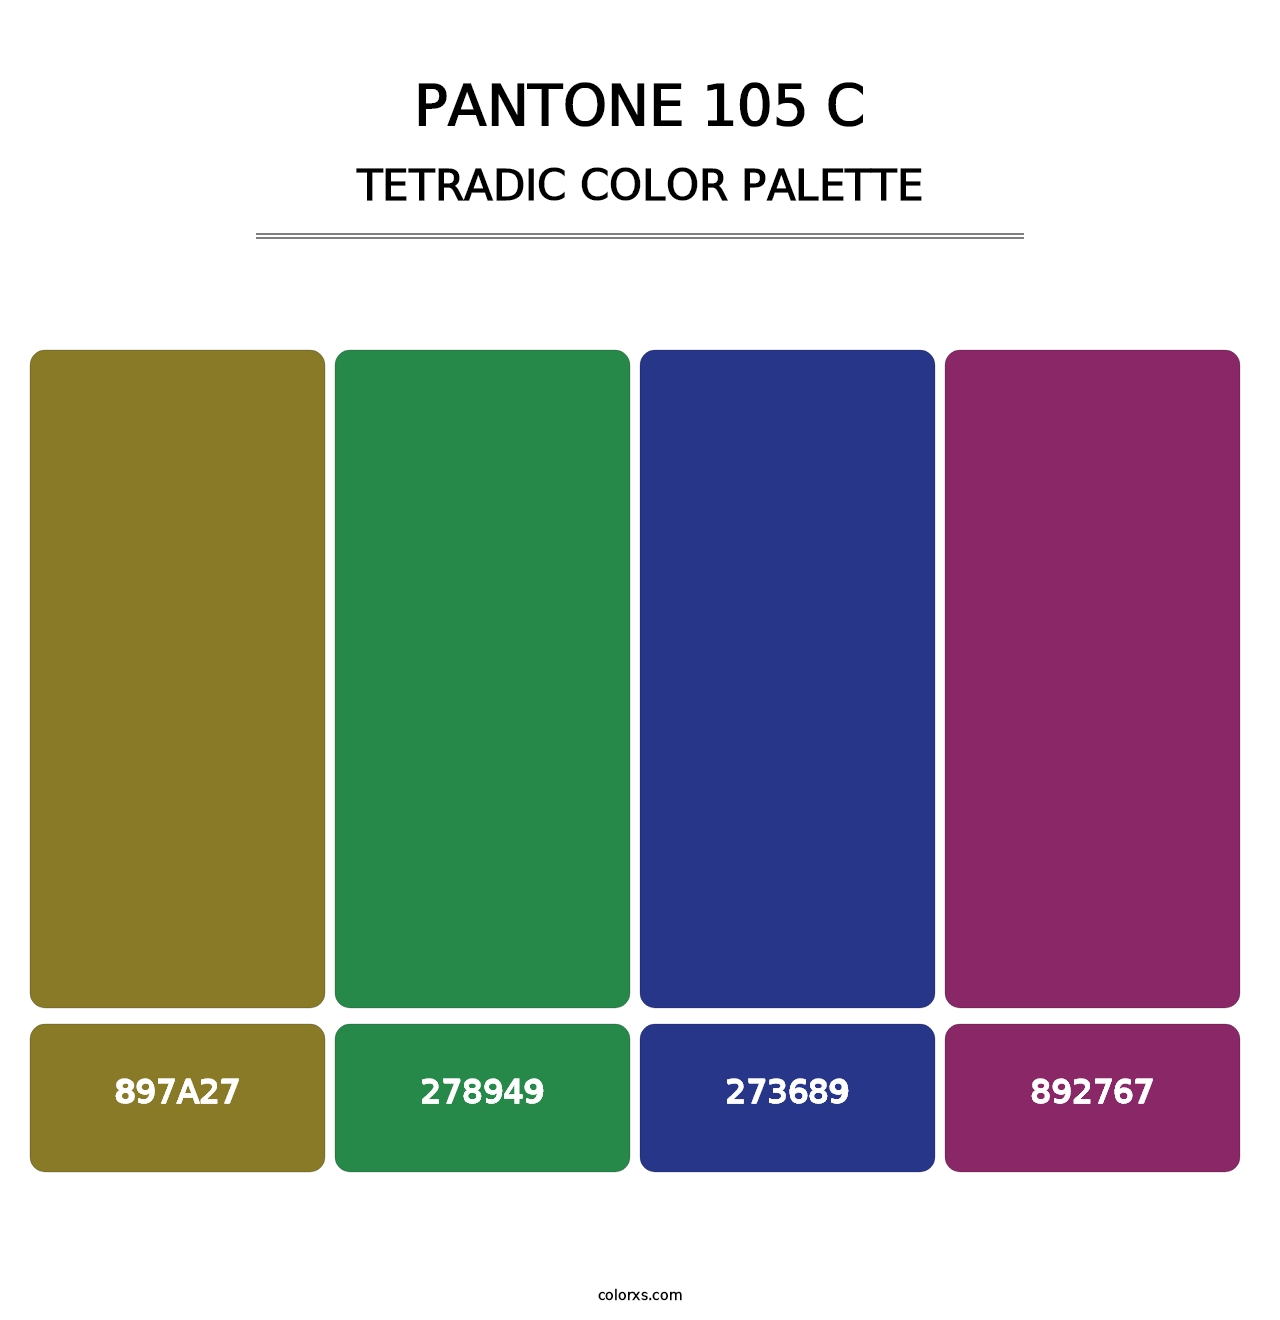 PANTONE 105 C - Tetradic Color Palette